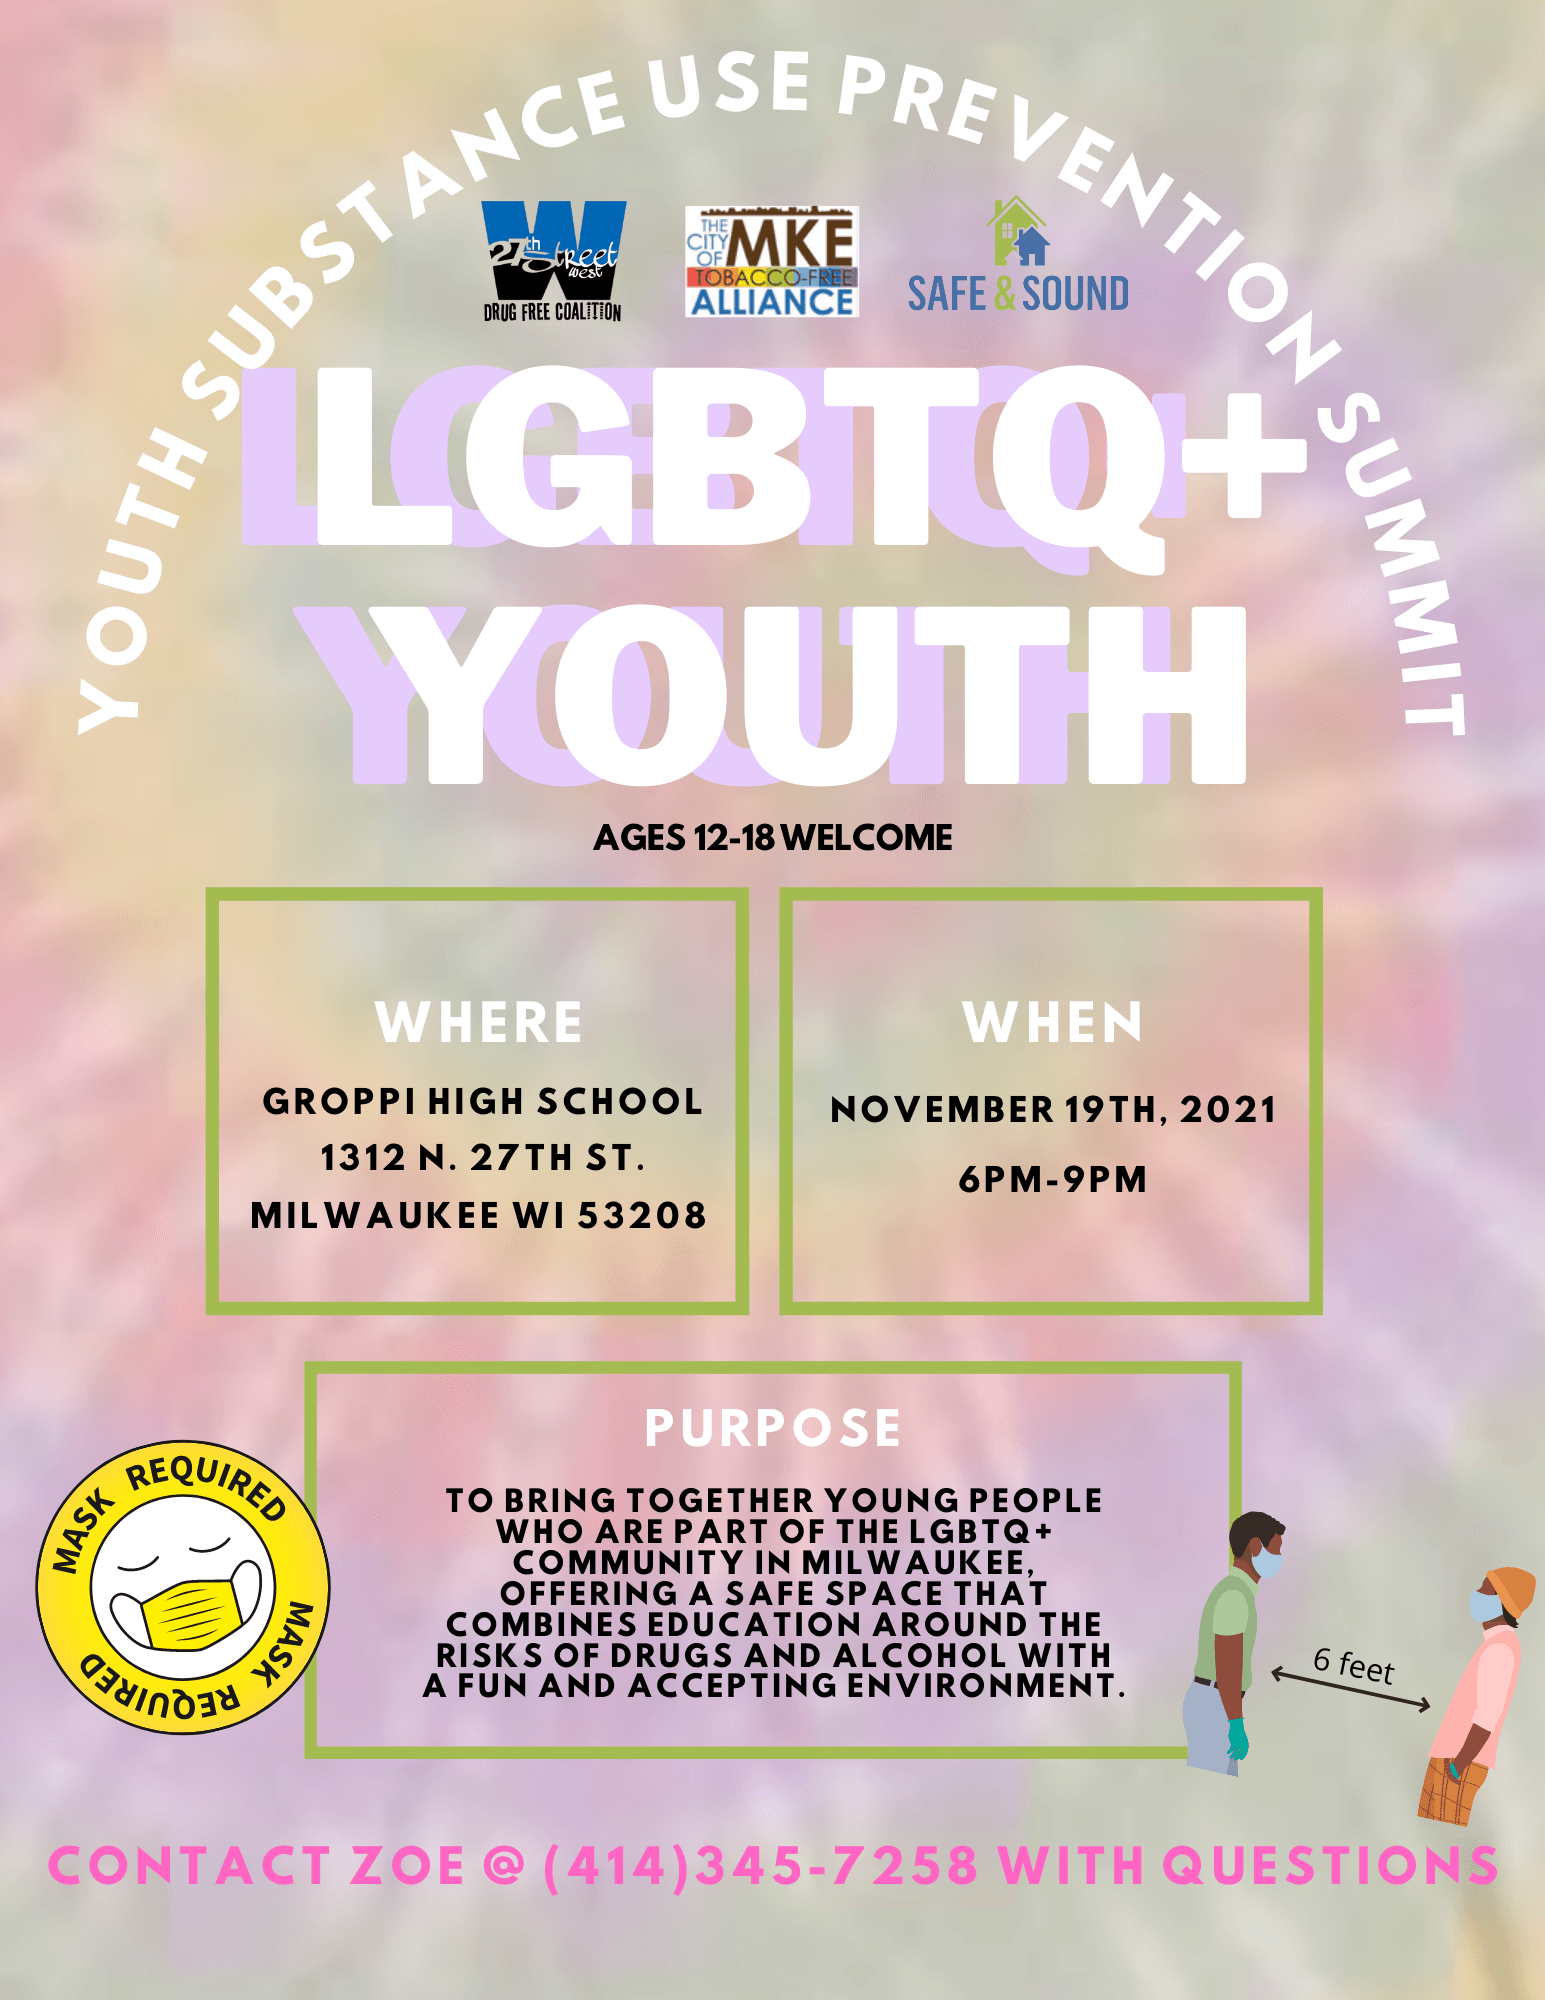 LGBTQ+ youth summit 2021